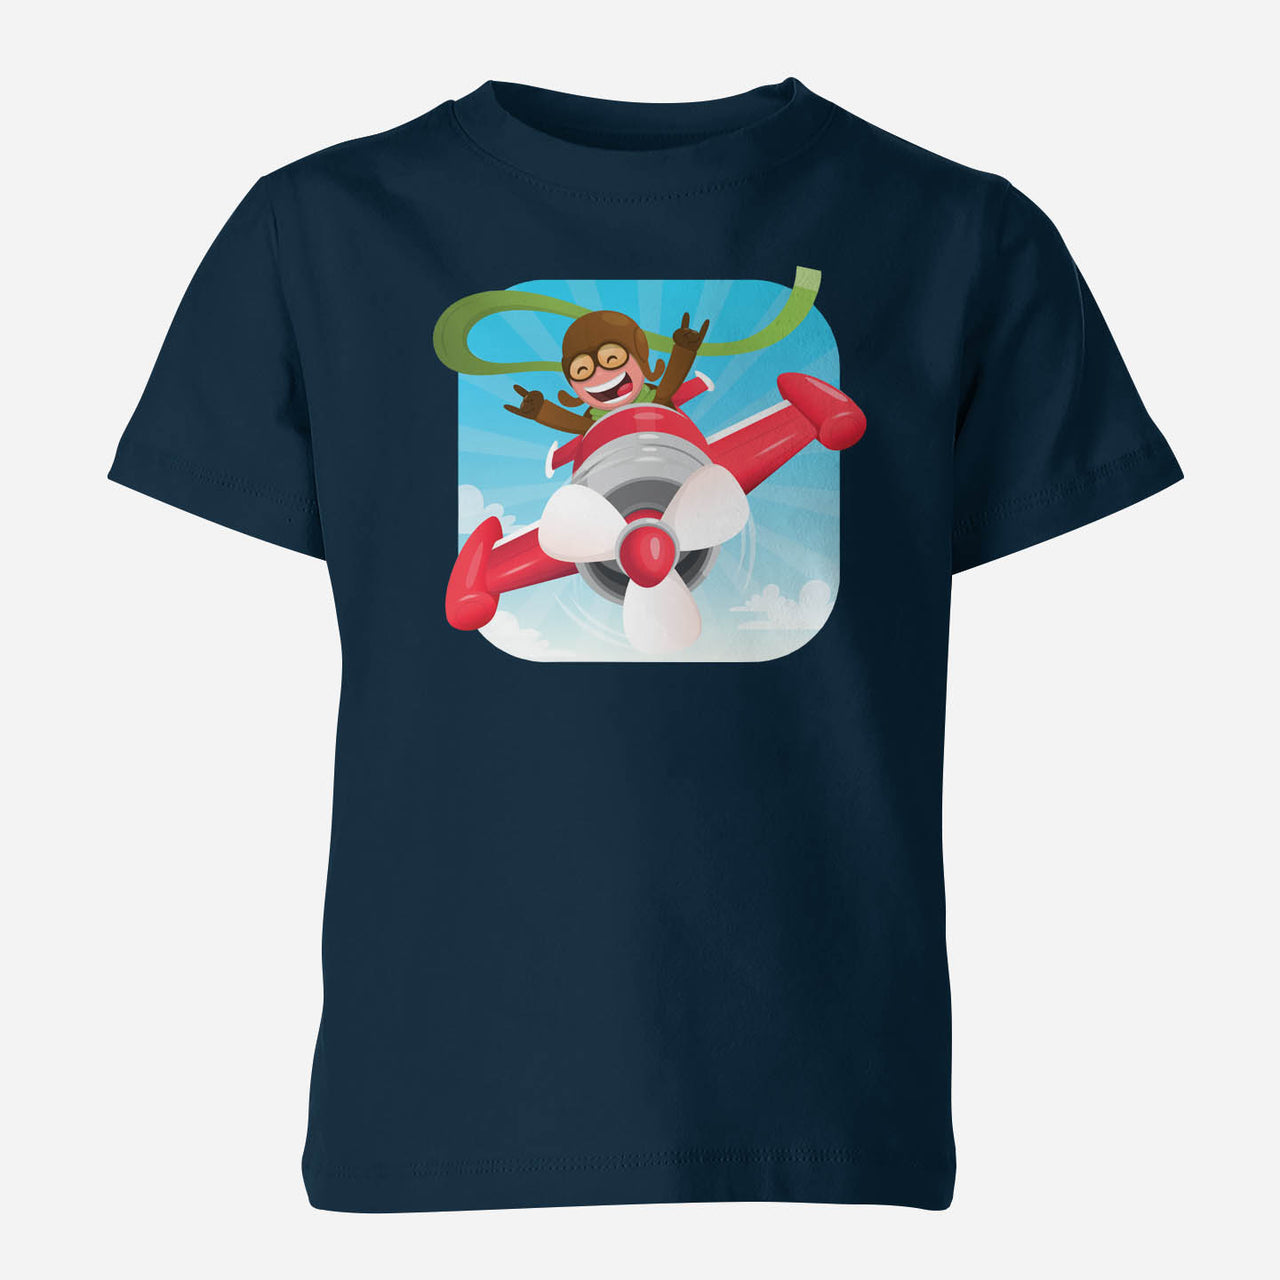 Happy Pilot Designed Children T-Shirts